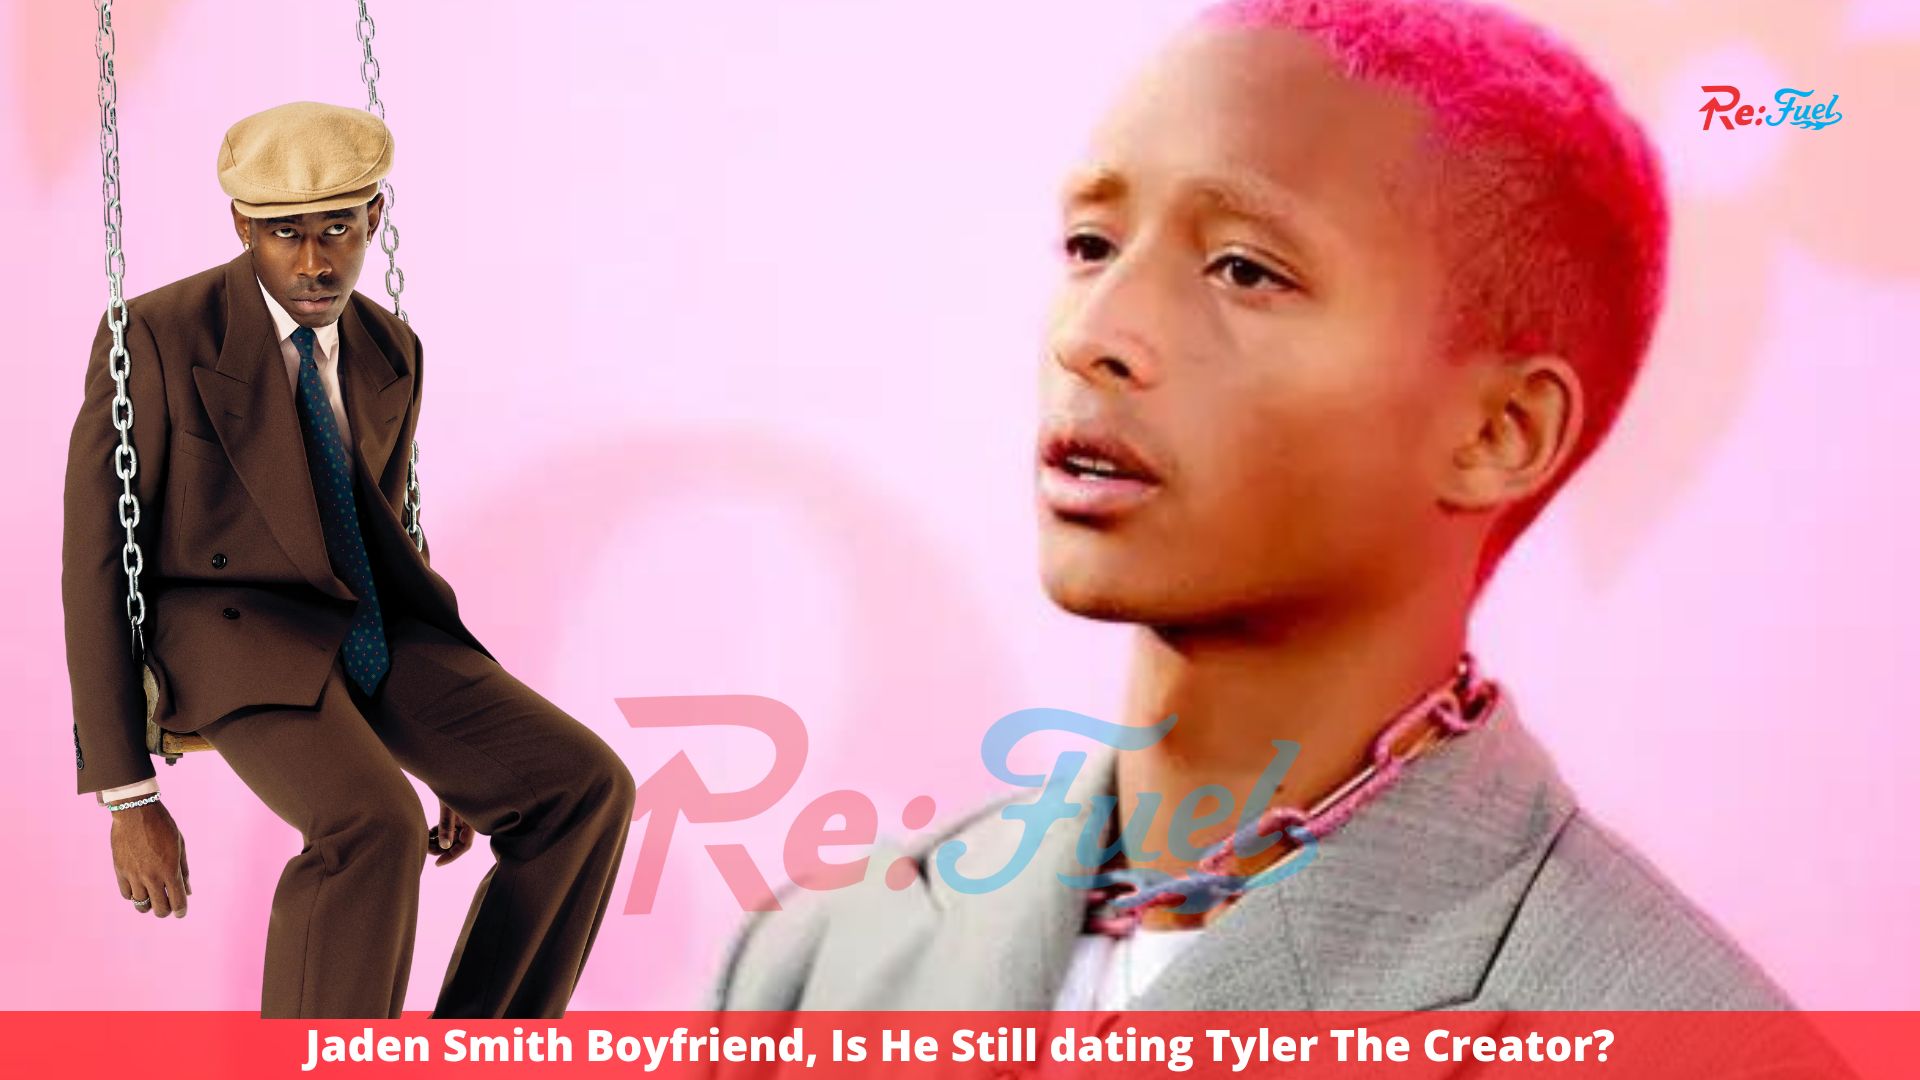 Jaden Smith Boyfriend, Is He Still dating Tyler The Creator?